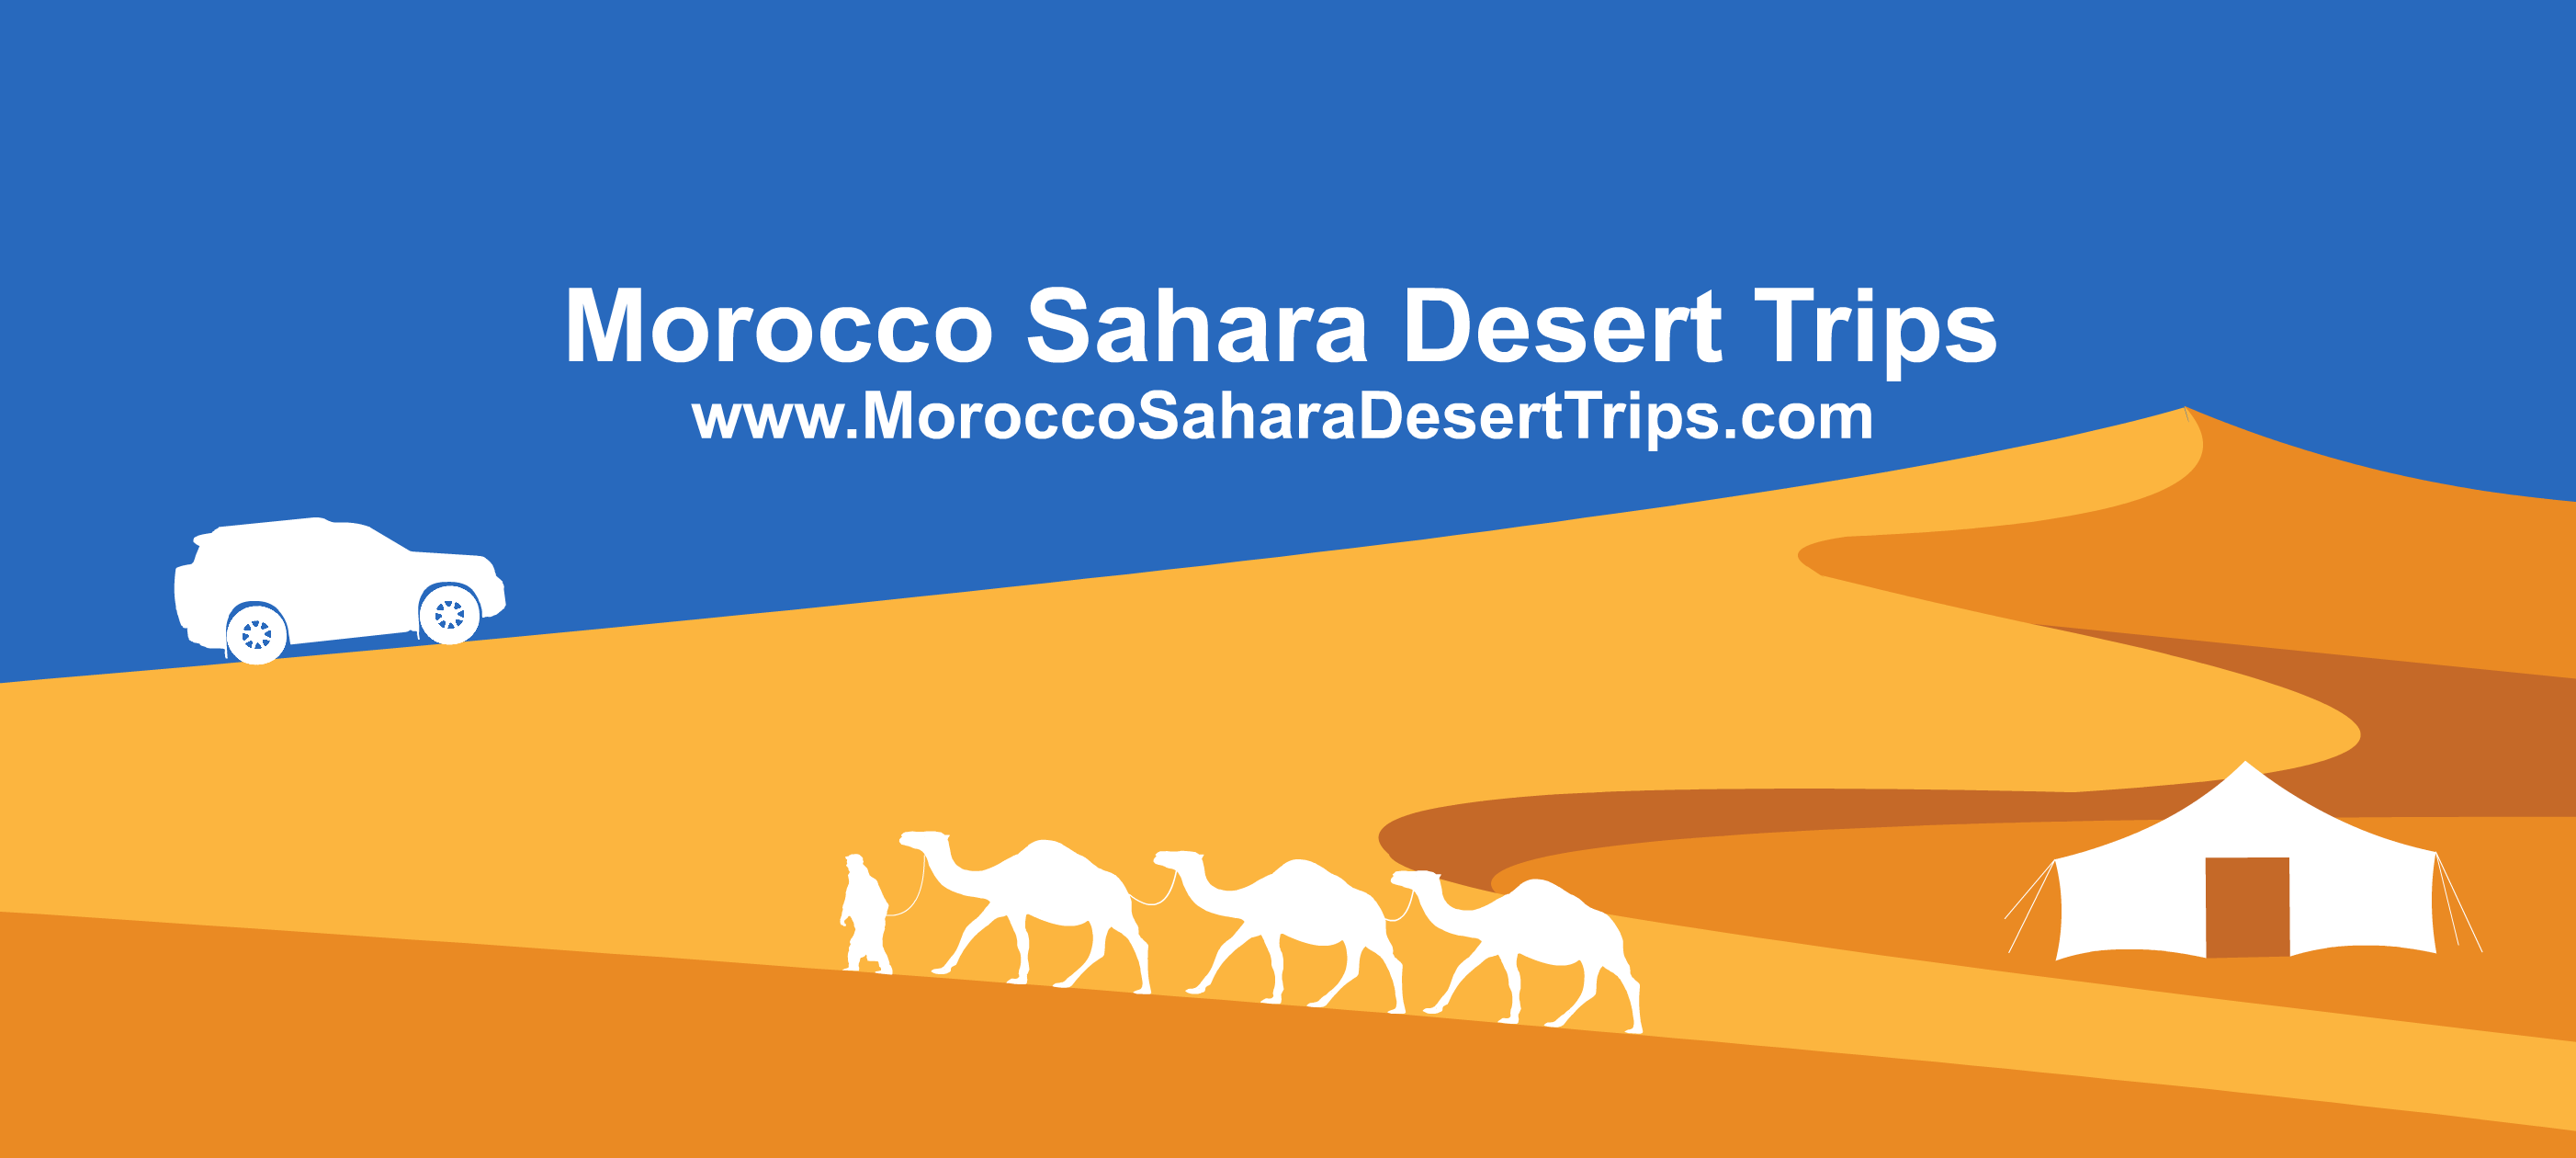 Morocco Travel Advice and Advisories Morocco Sahara Desert Trips